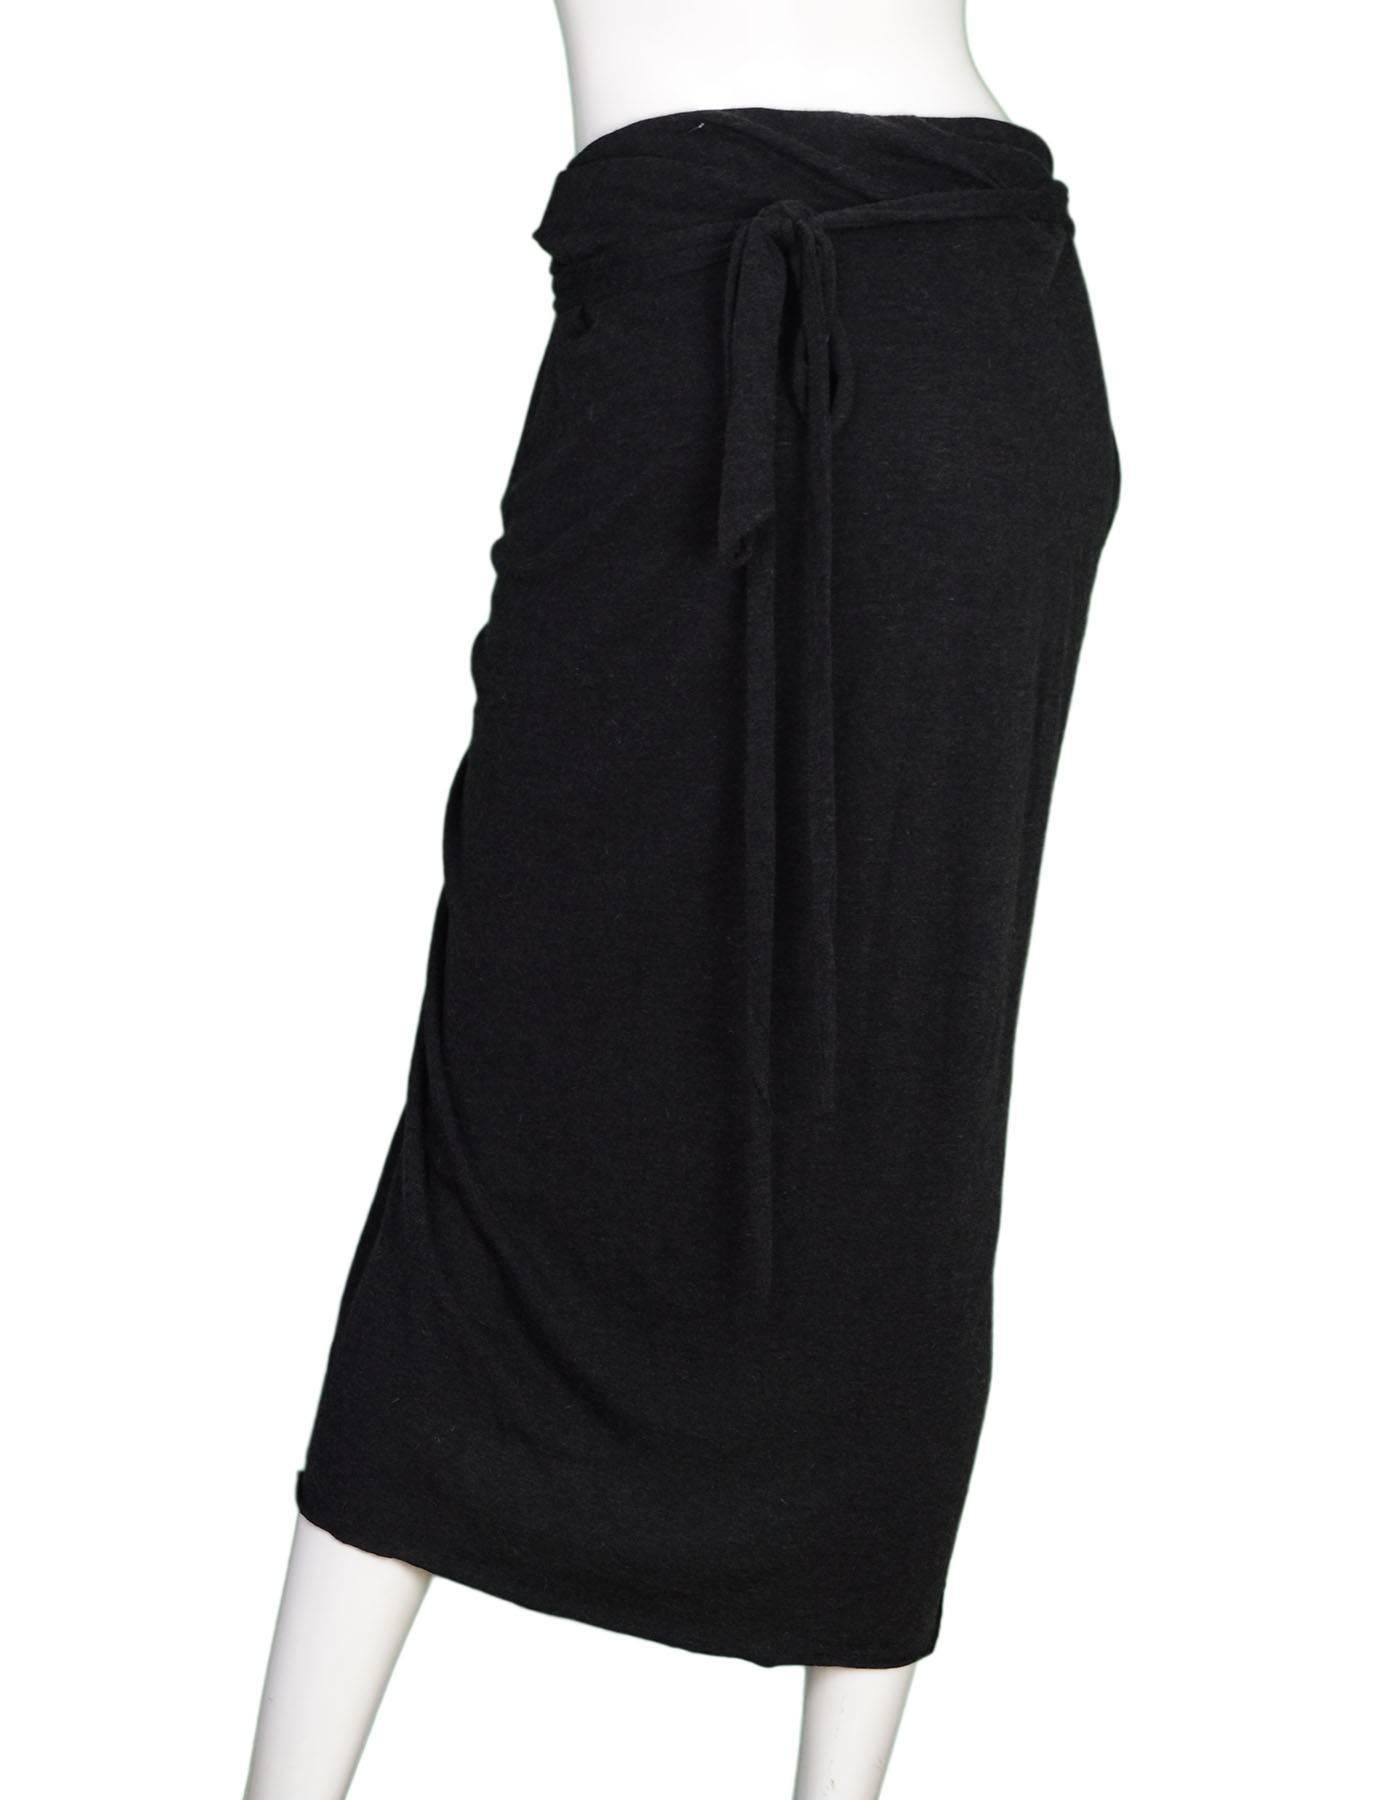 Black Rick Owens NEW Grey Draped Front Skirt sz US10 rt. $470